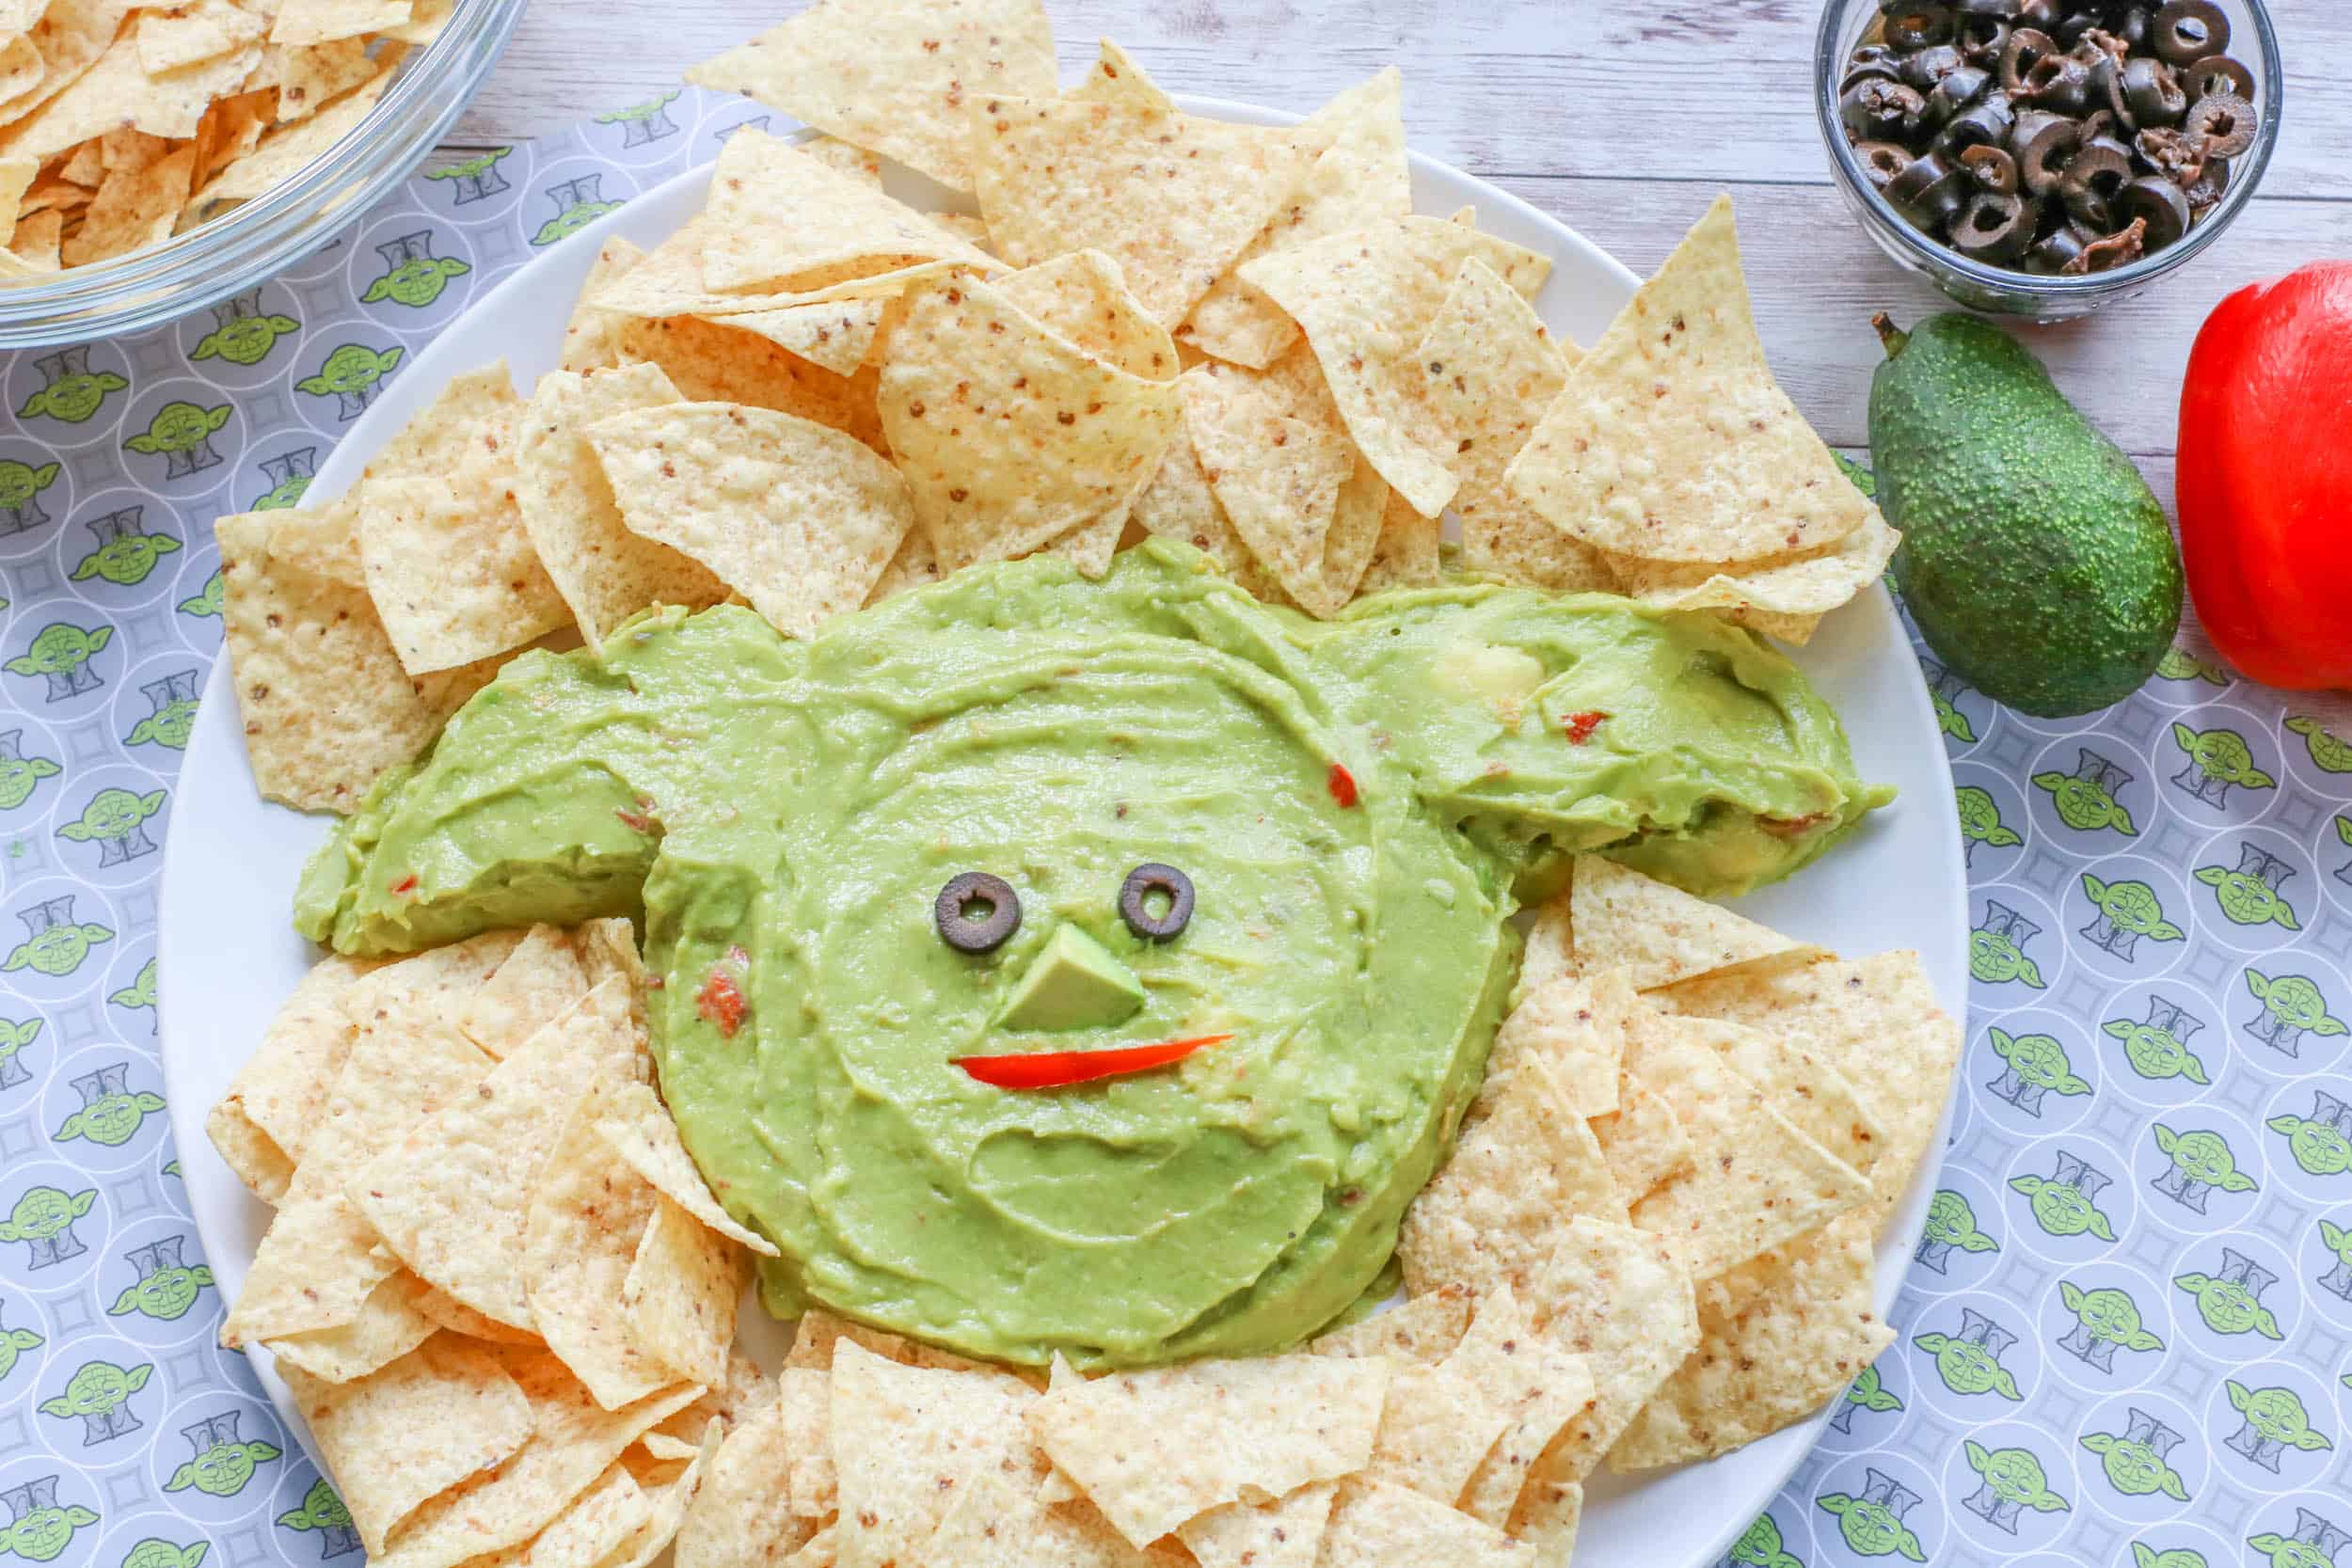 How to make a Baby Yoda guacamole platter